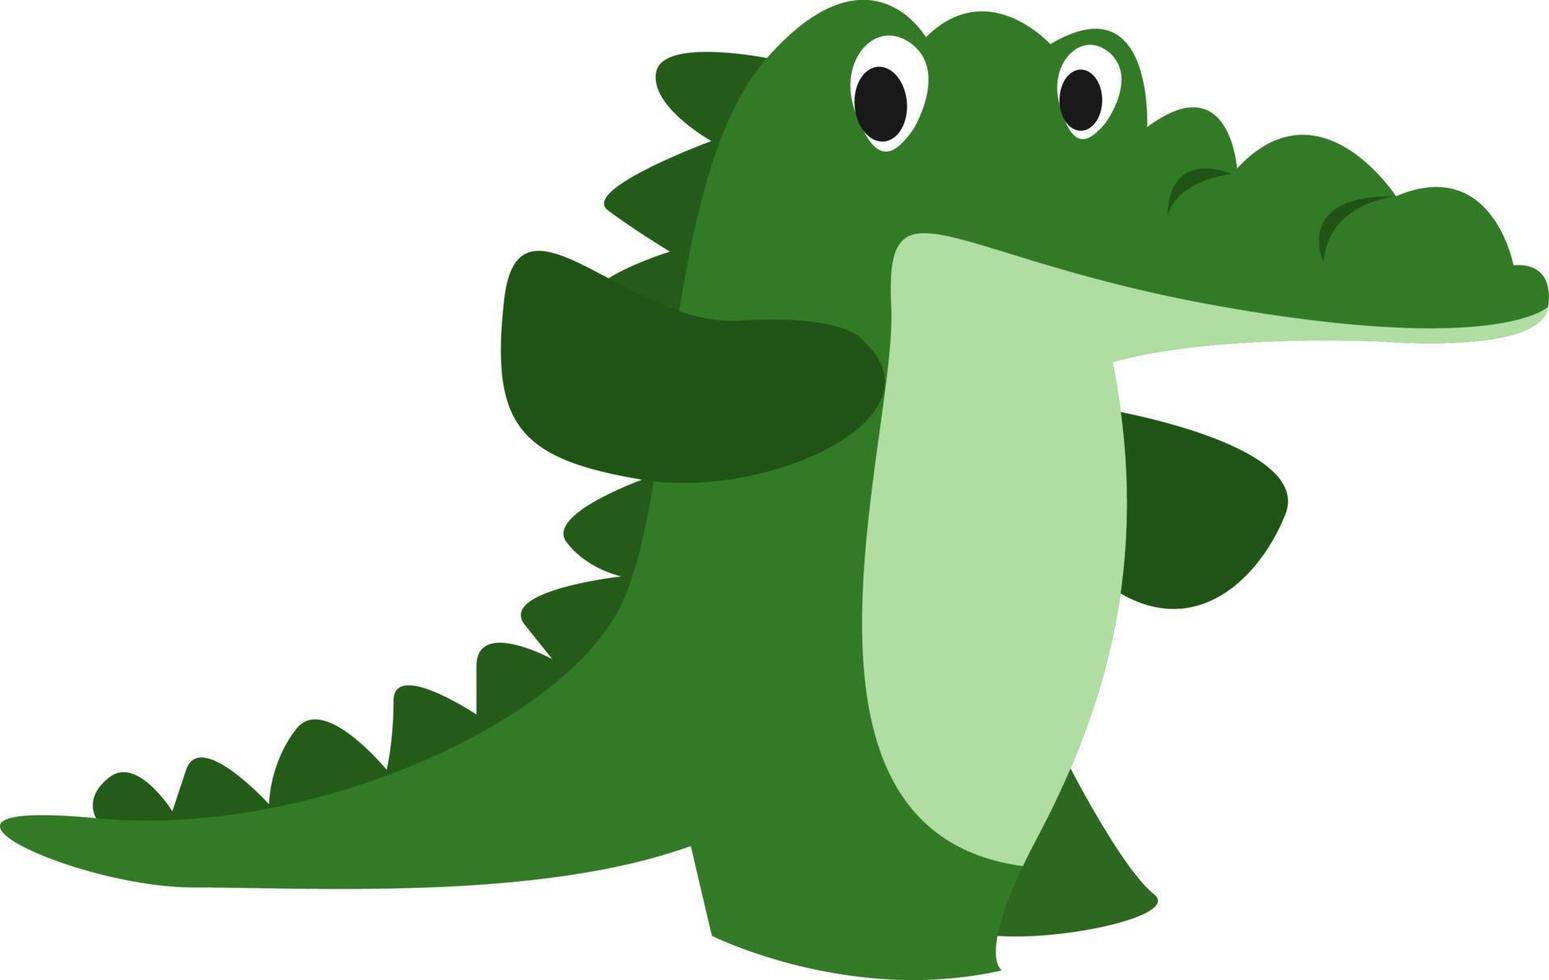 Green crocodile, illustration, vector on white background